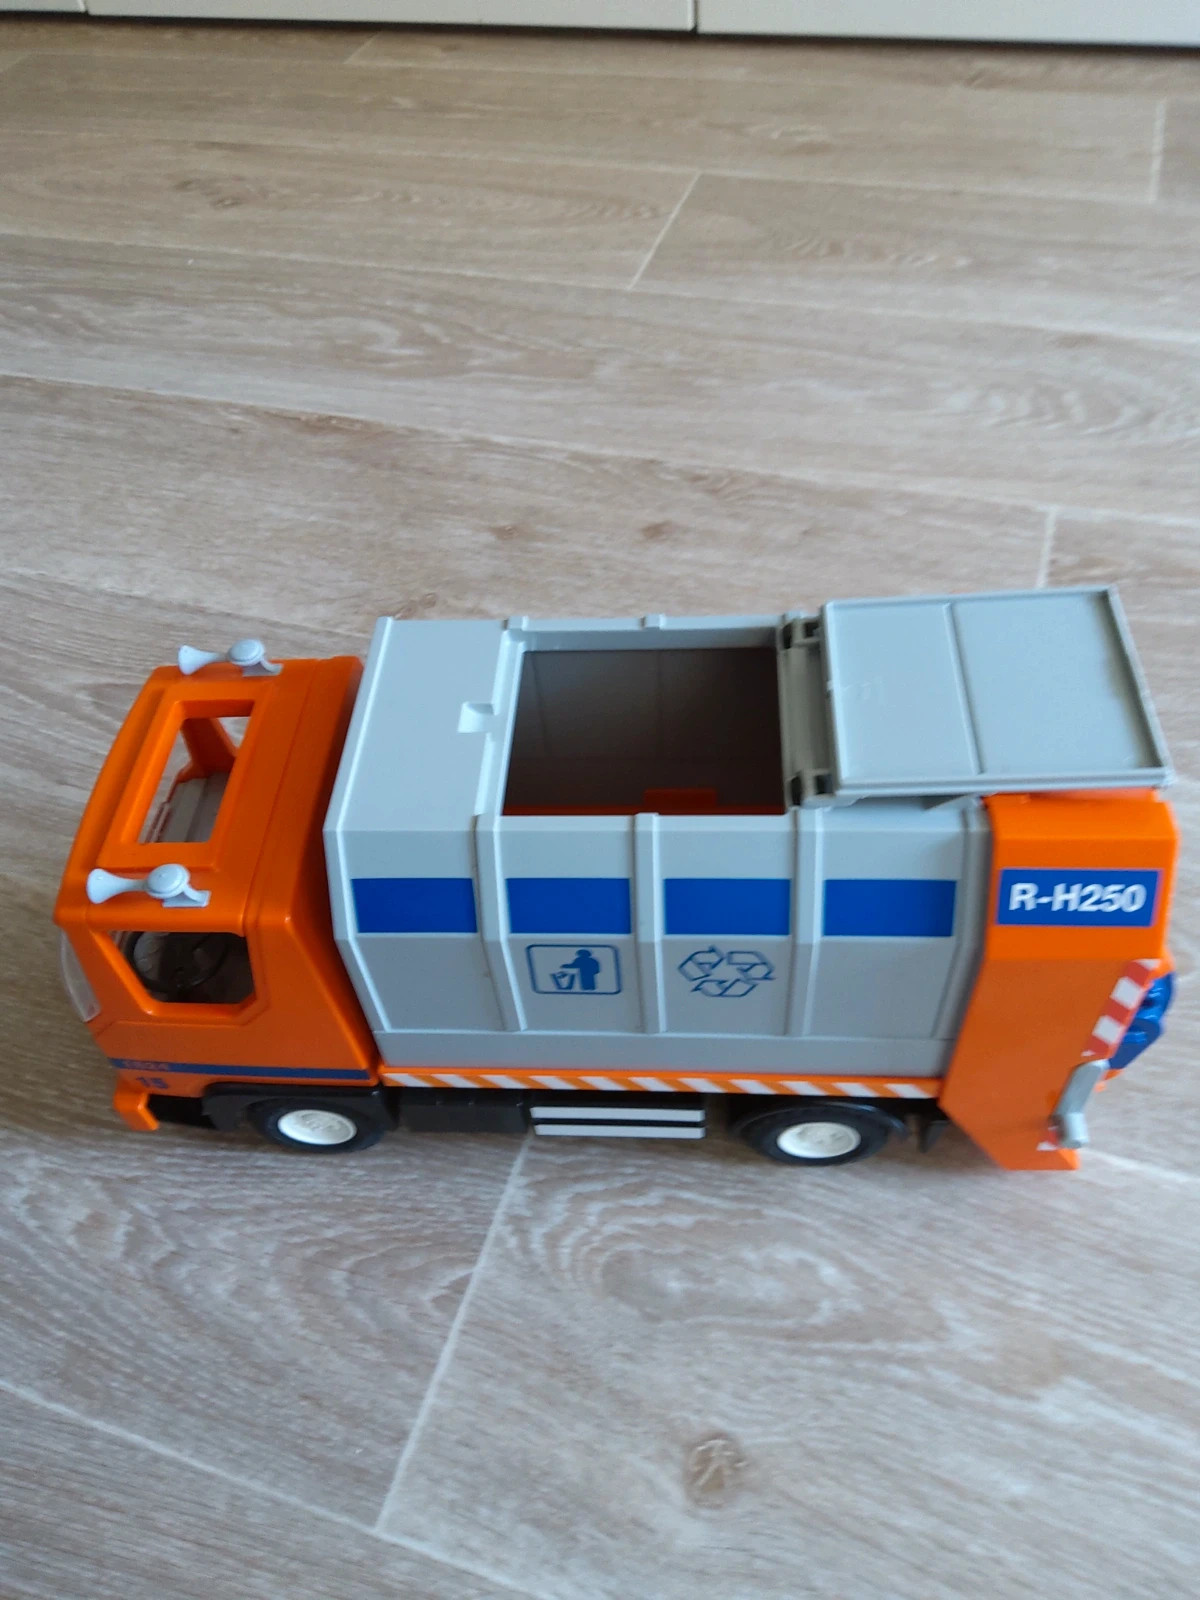 Playmobil - Camion de recyclage ordures - 4418